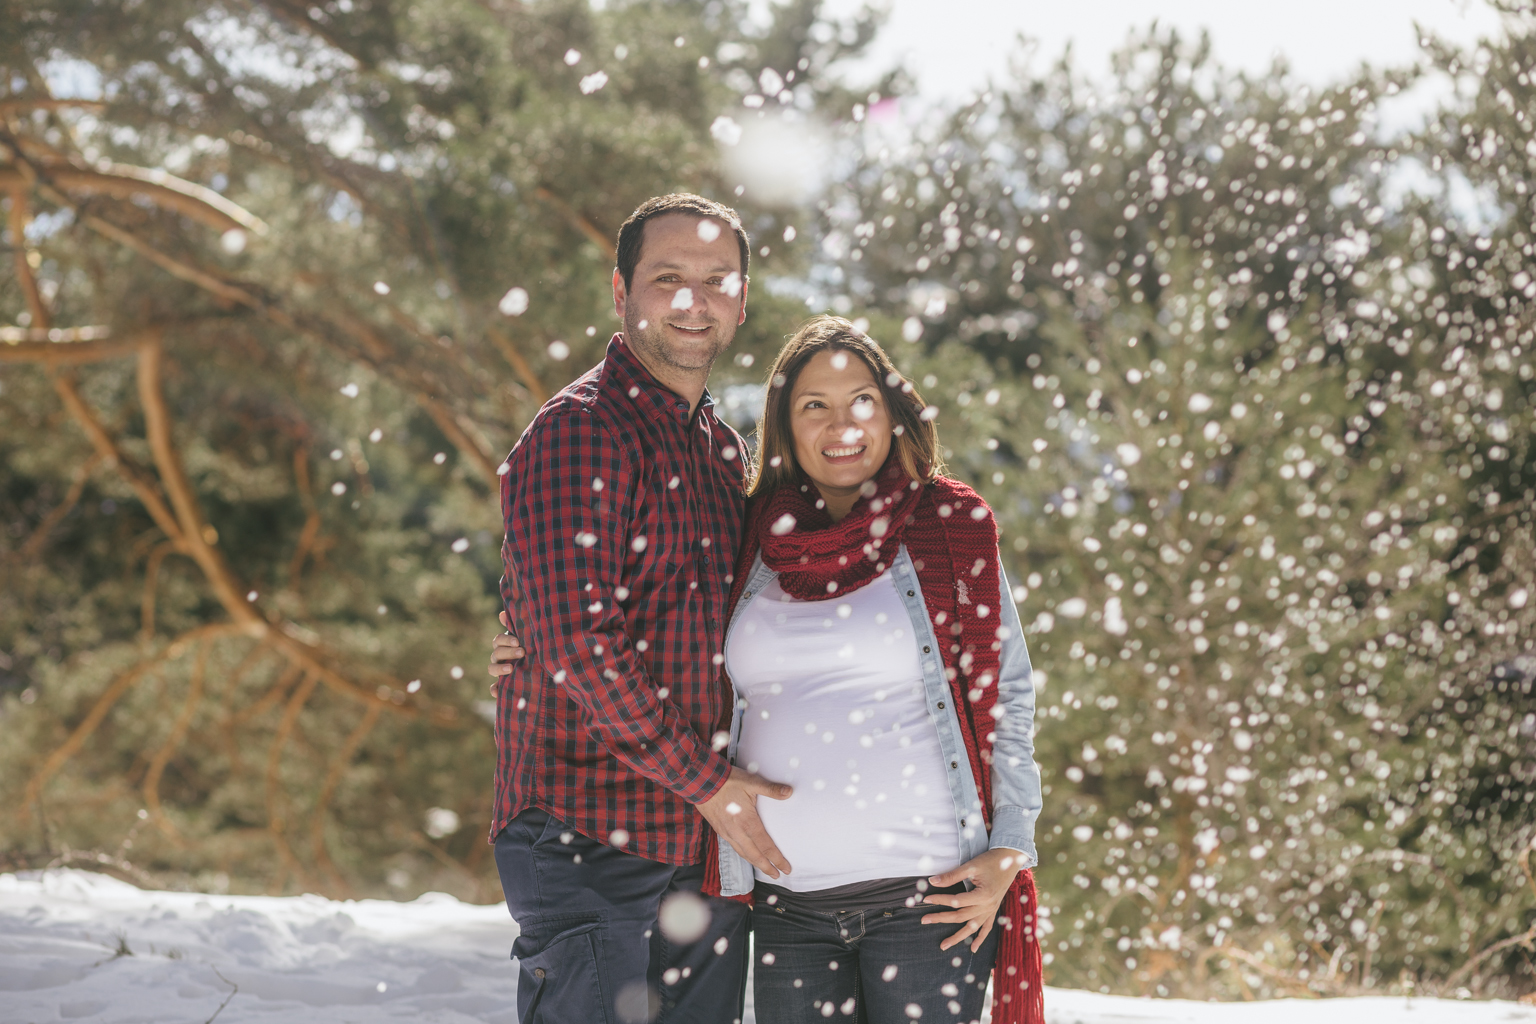 Fotógrafo de embarazo Madrid - Fotógrafo de embarazo en la nieve :: fotógrafo de embarazo la granja de san ildefonso :: fotografía de embarazo en la nieve Madrid